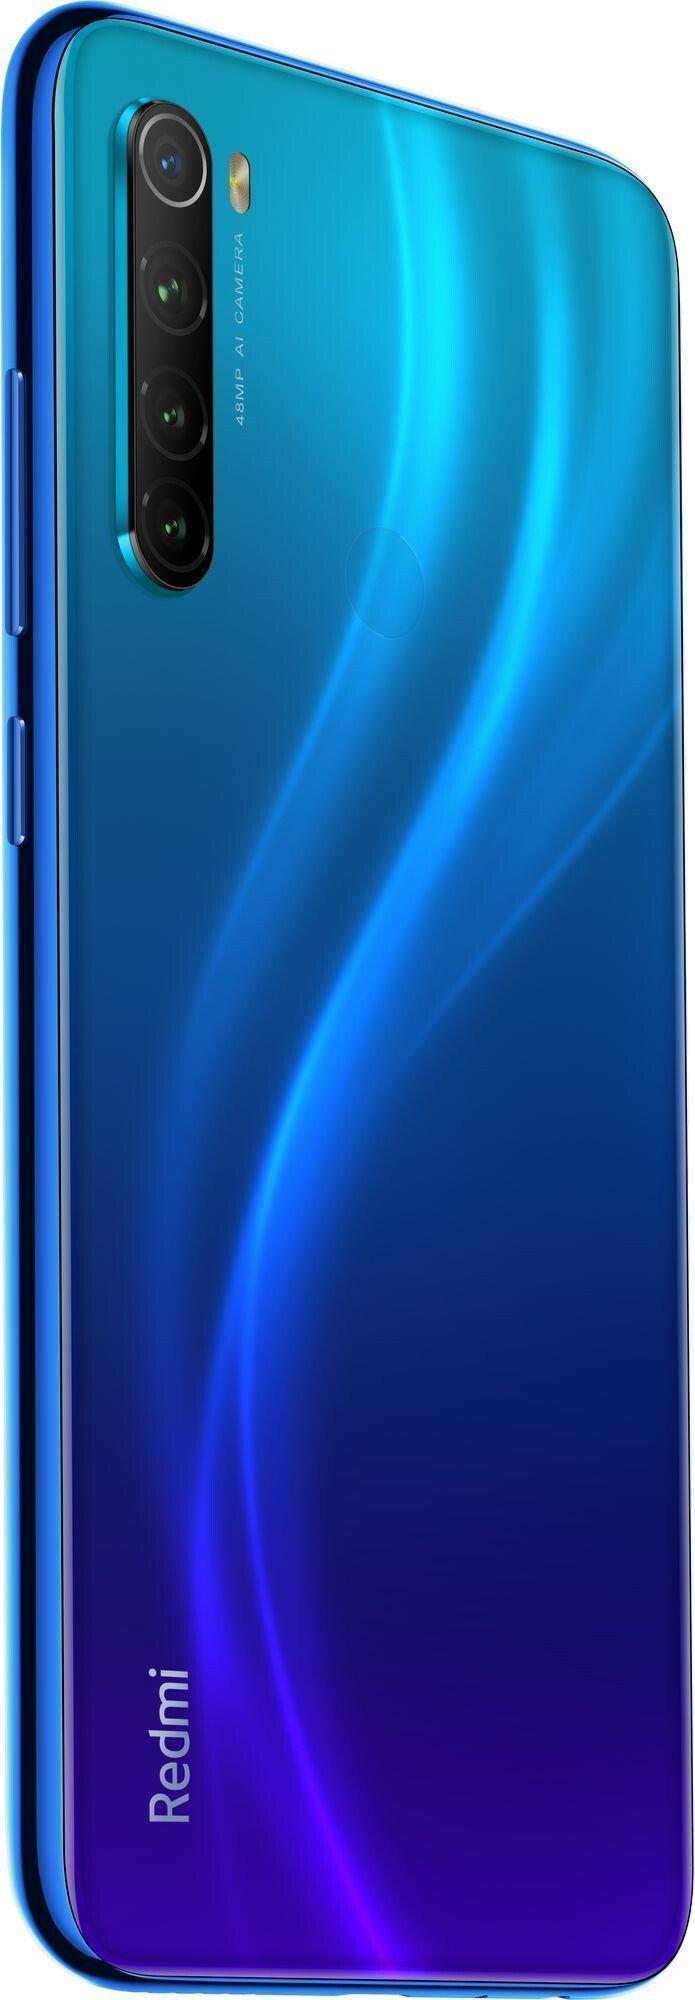 Купить Смартфон Xiaomi Redmi Note 8 4/128Gb Neptune Blue